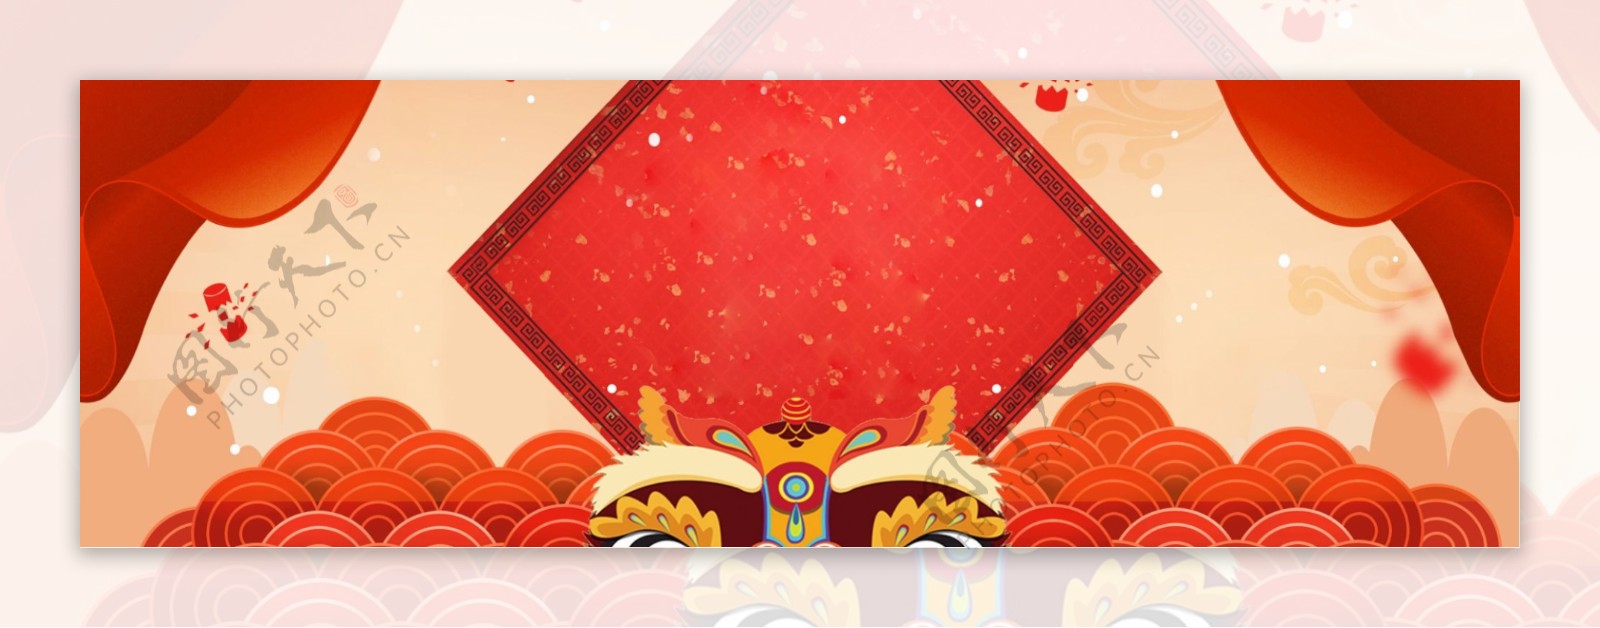 福到年货节中国风新年节日banner背景